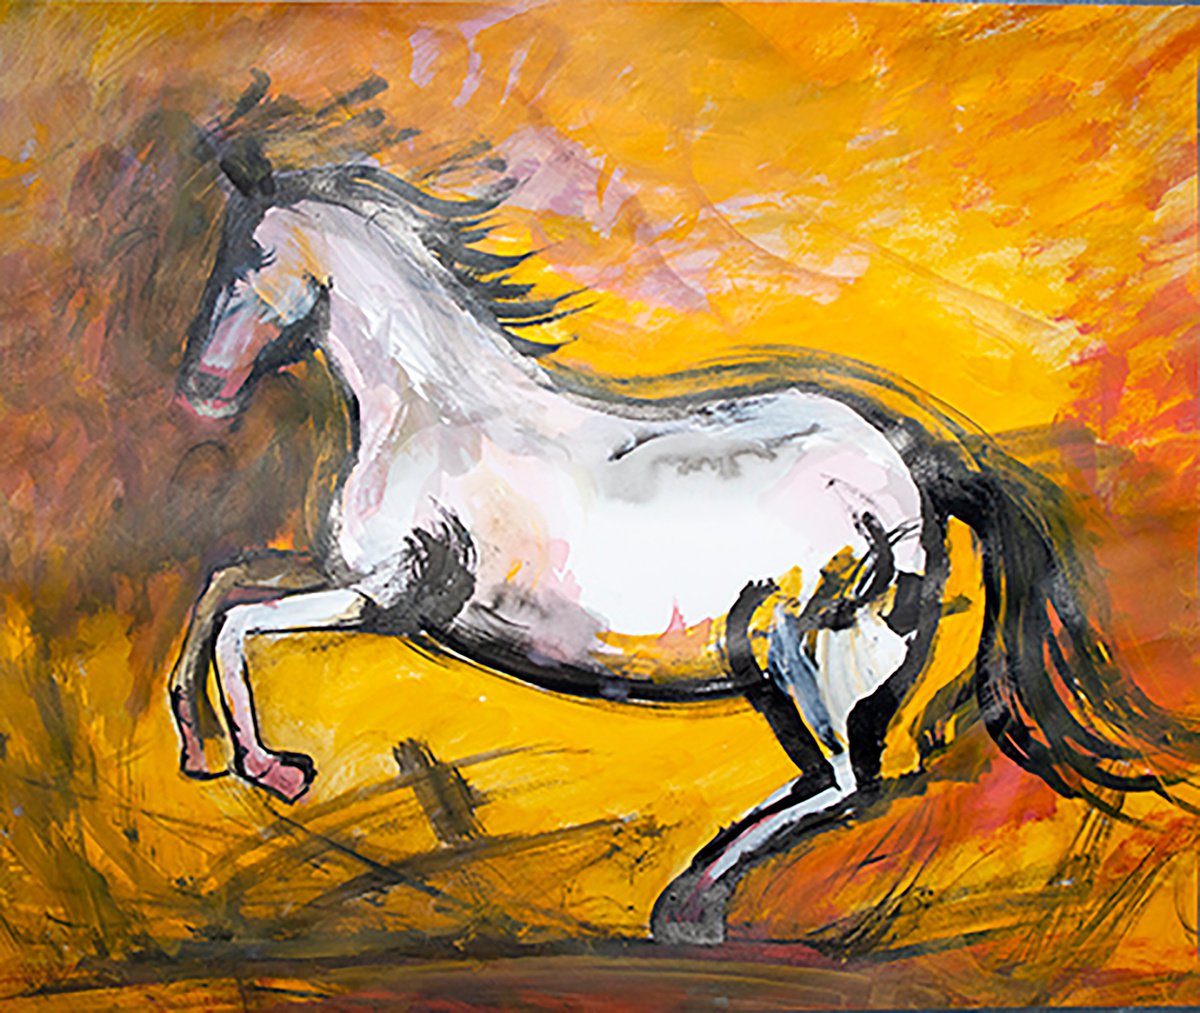 Prancing white horse by Ren Goorman